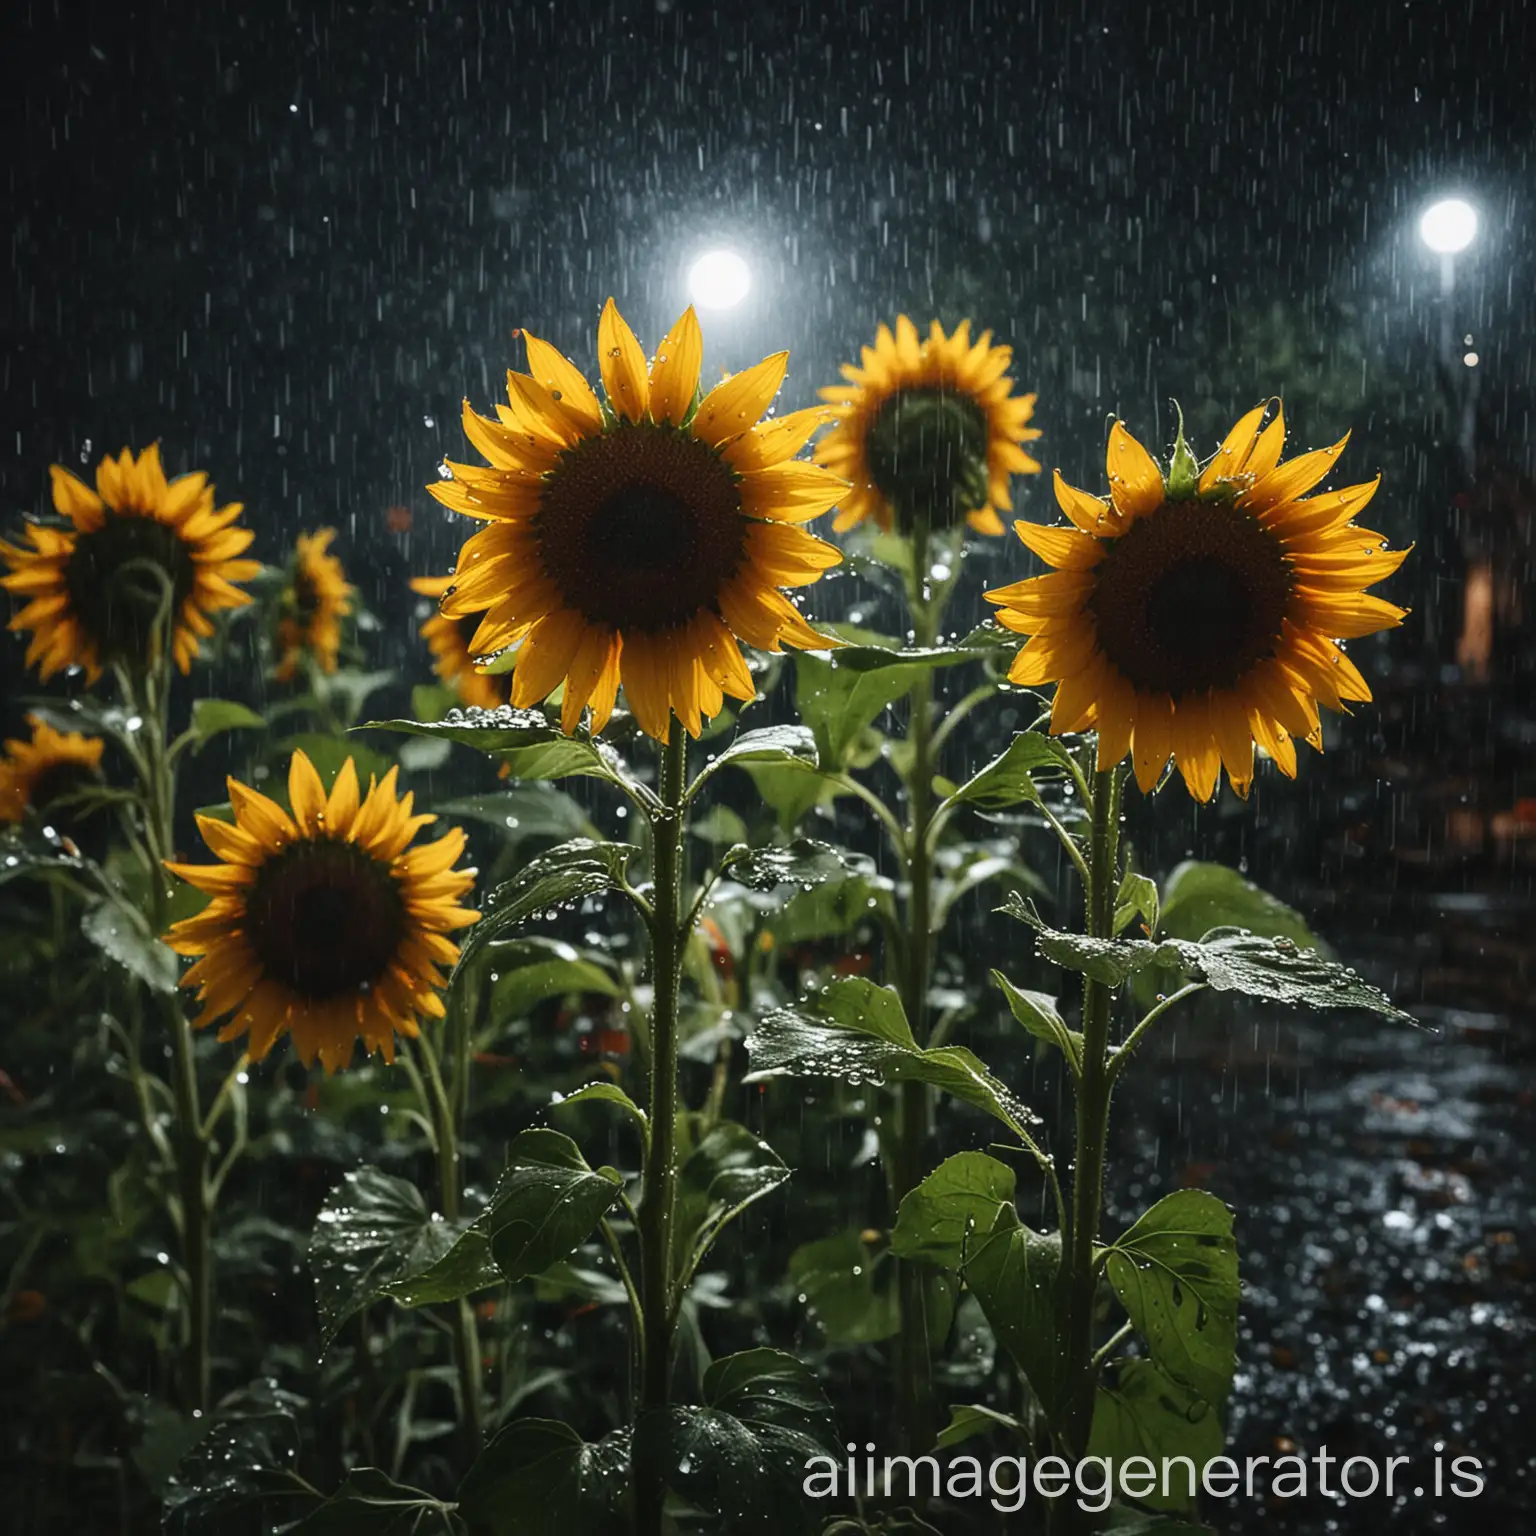 Sunflowers in the rainy night